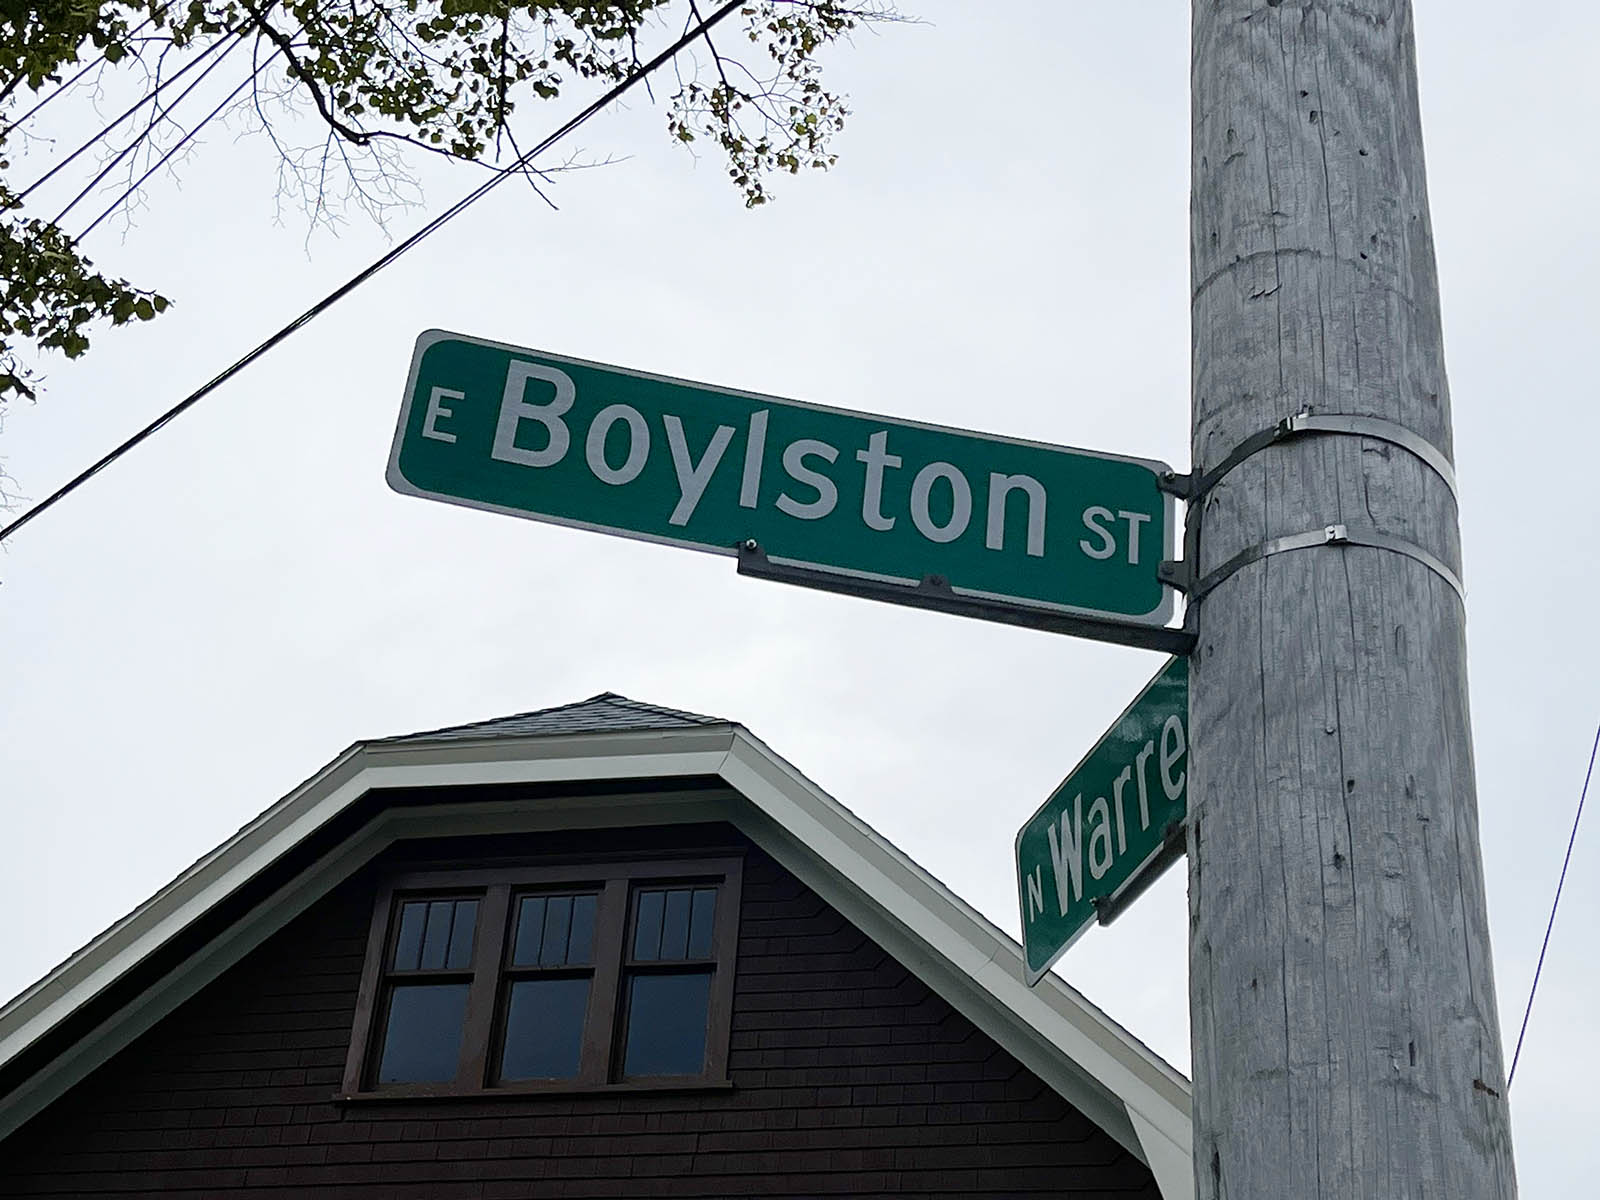 Boylston